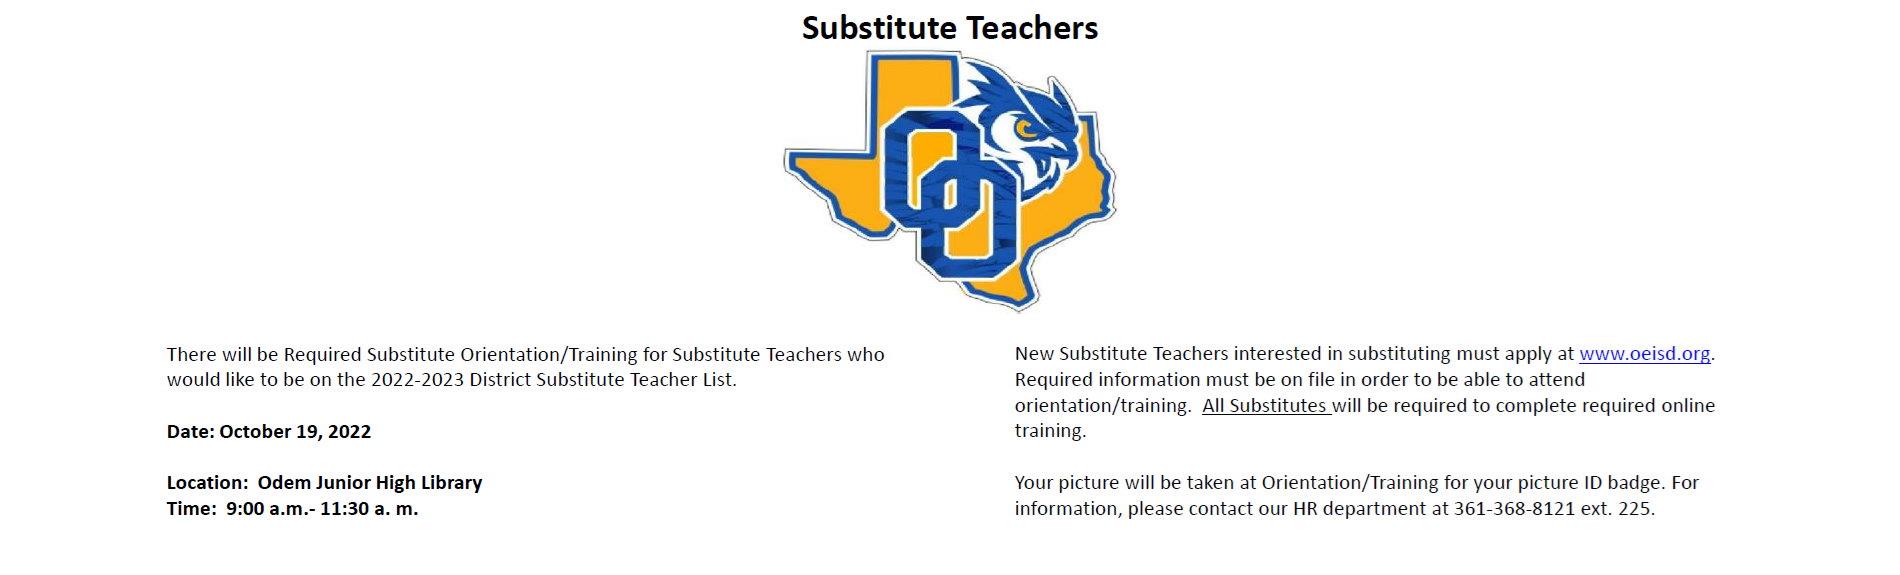 Sub Teachers